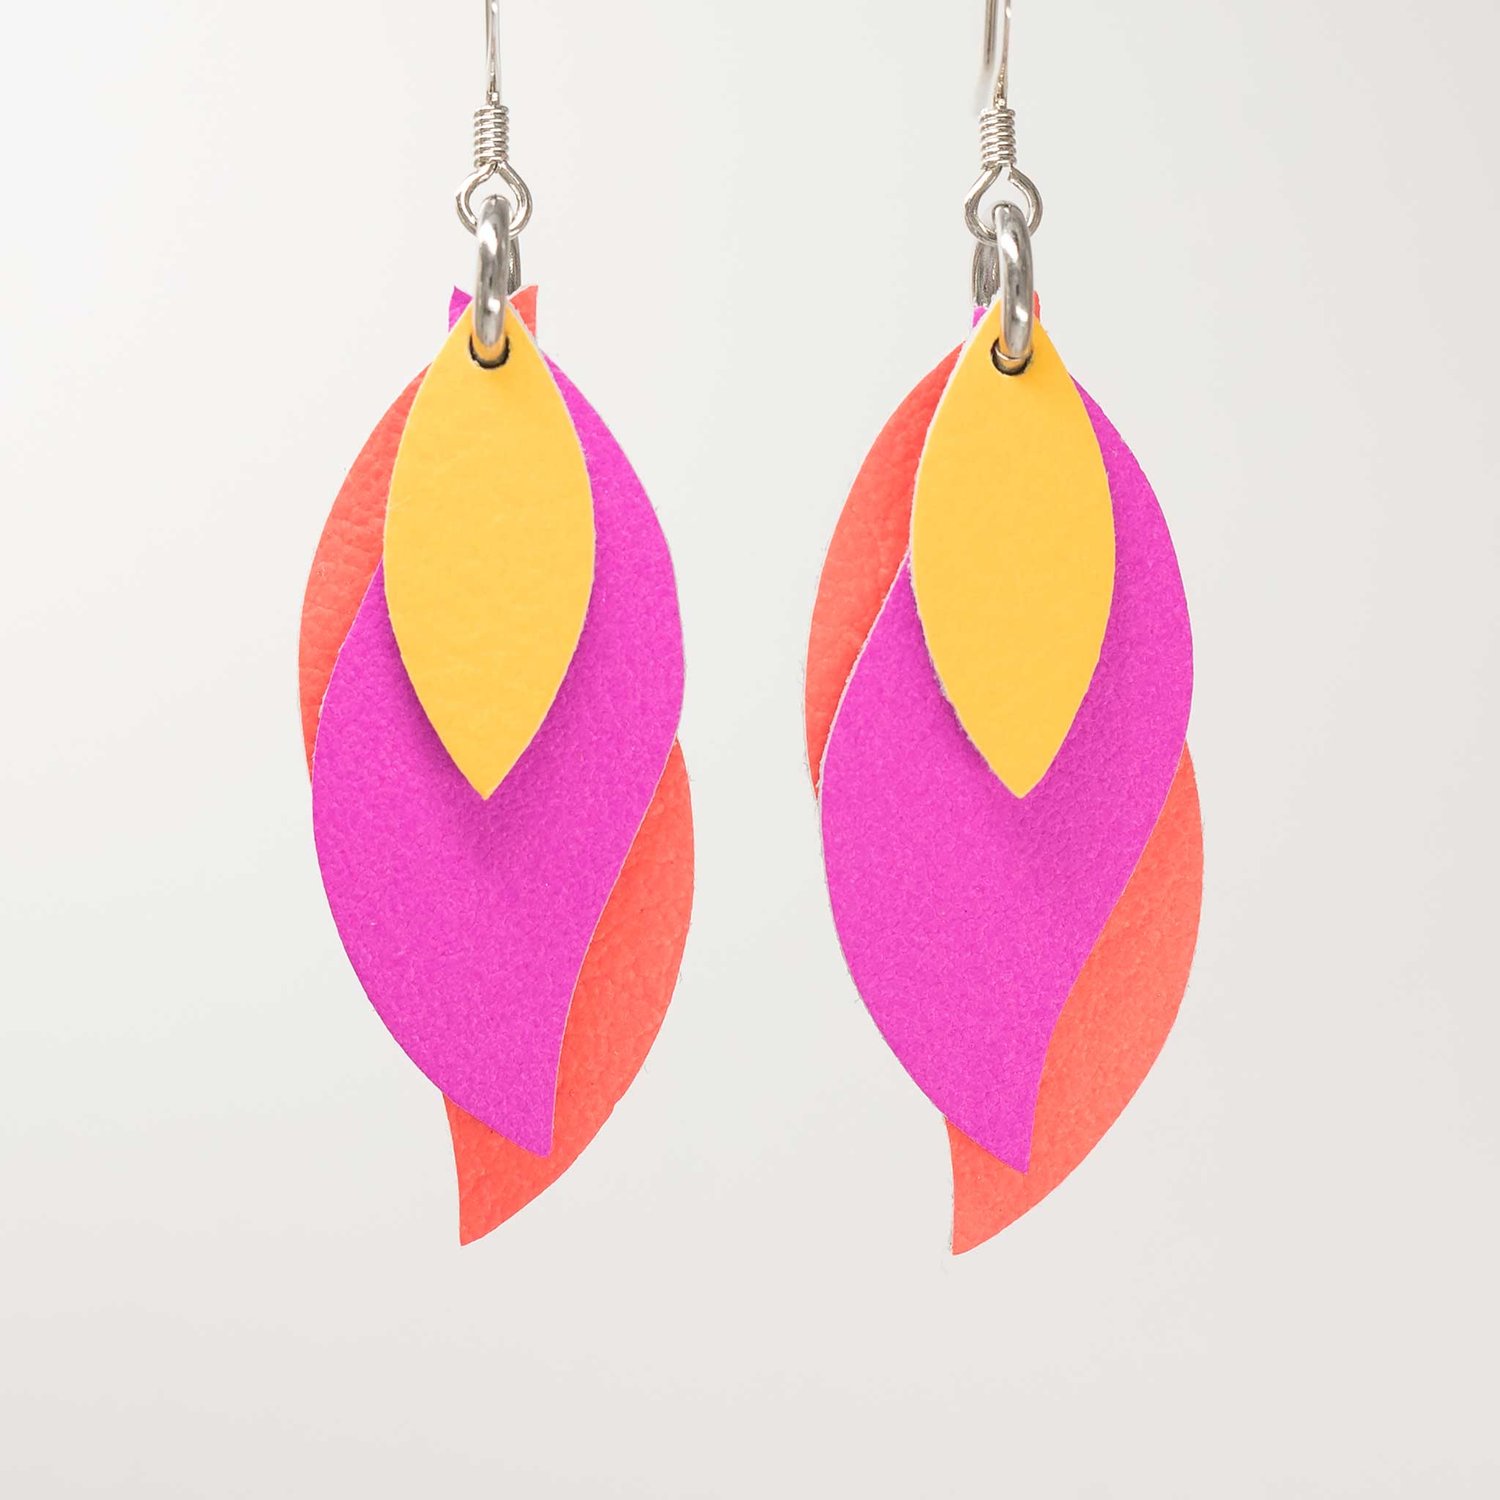 Image of Handmade Australian leather leaf earrings - Yellow, hot pink, orange [LYP-302]